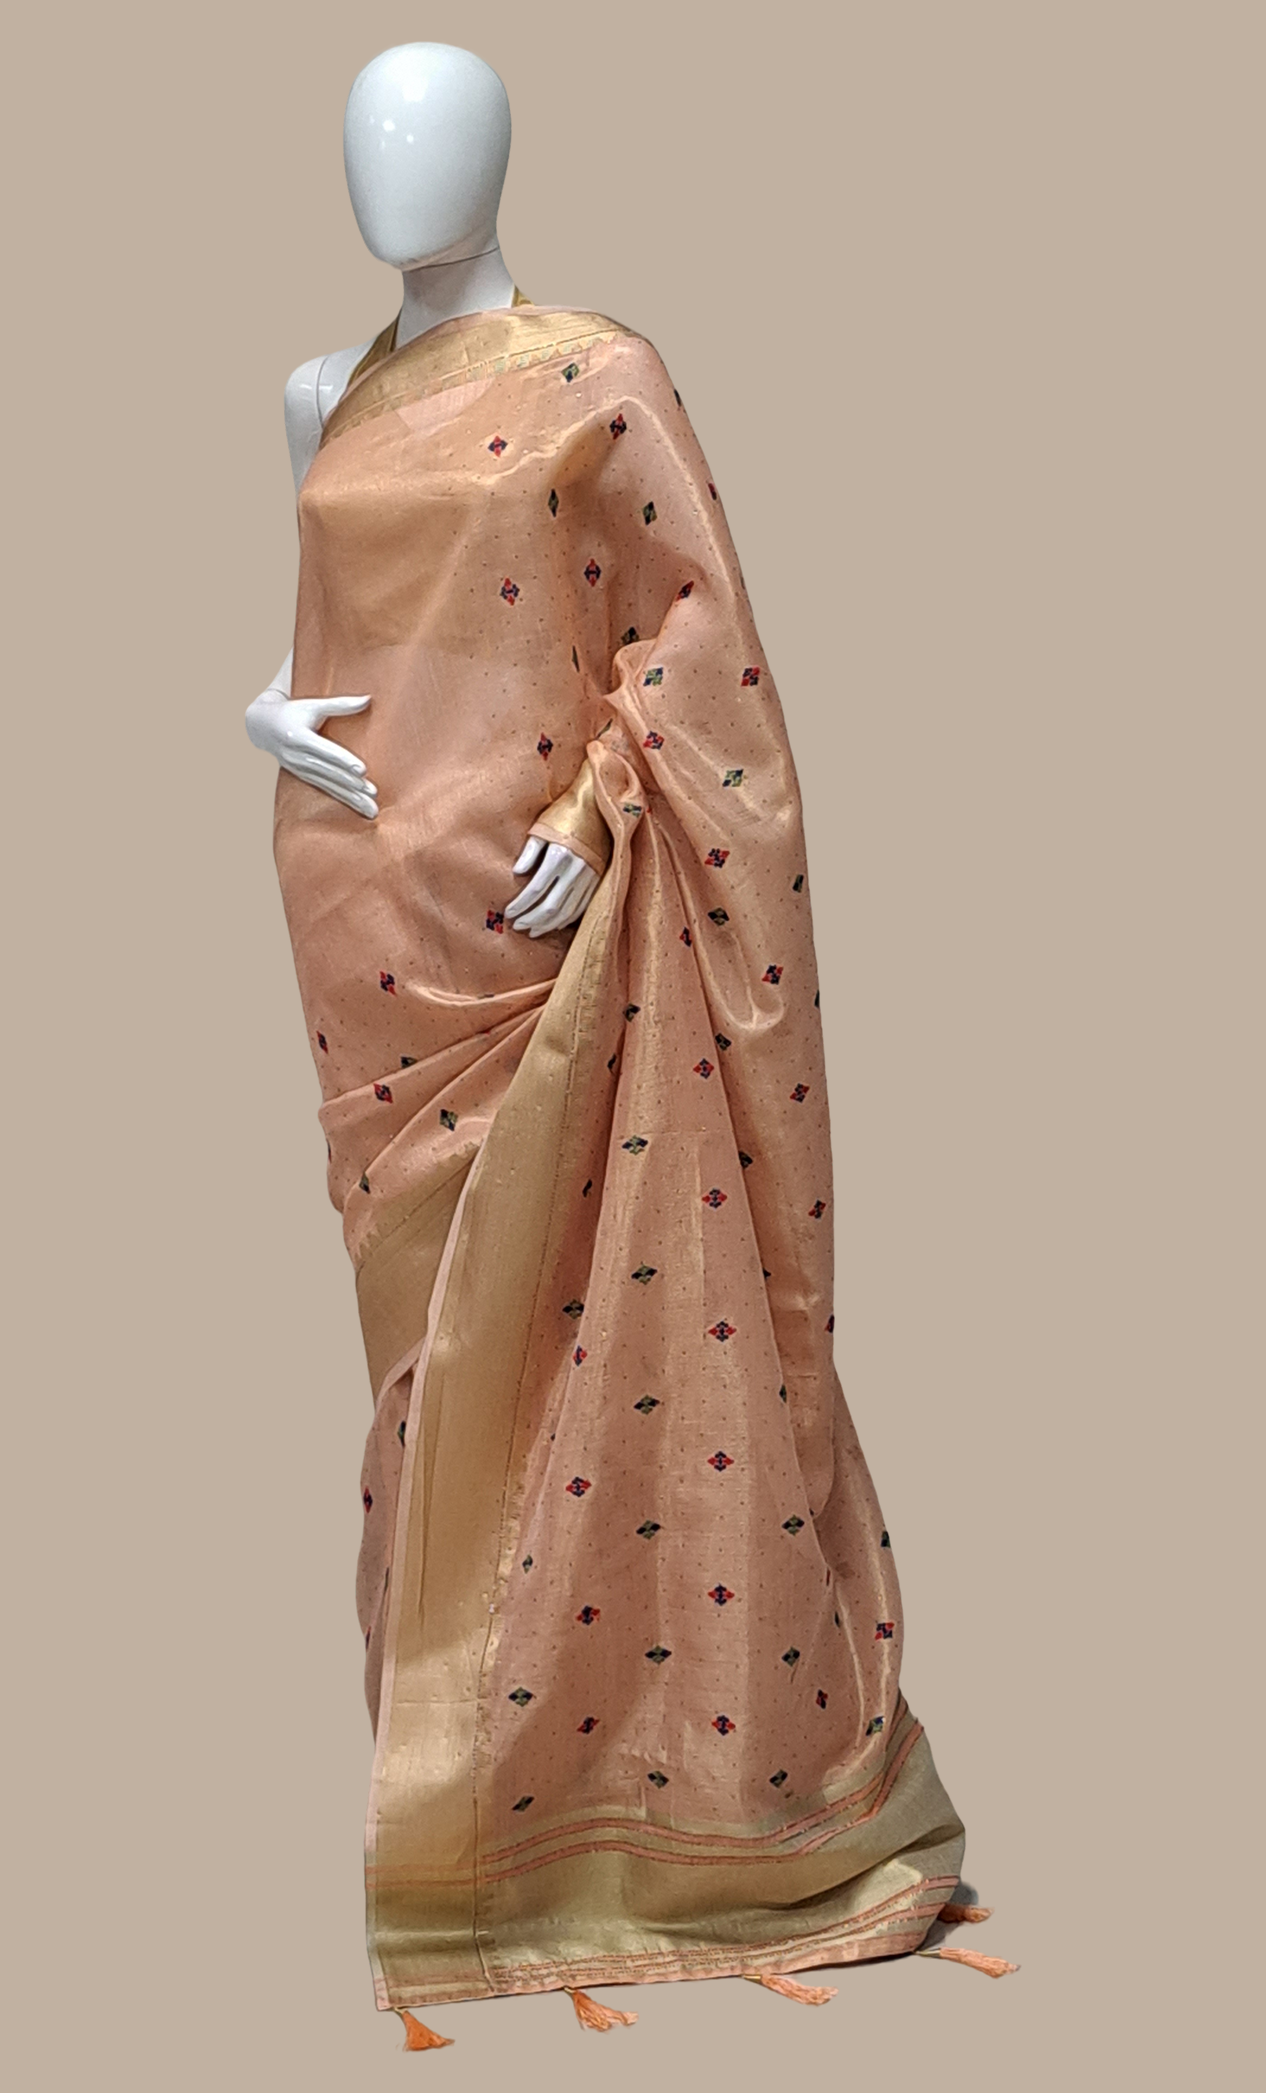 Peach Embroidered Linen Sari